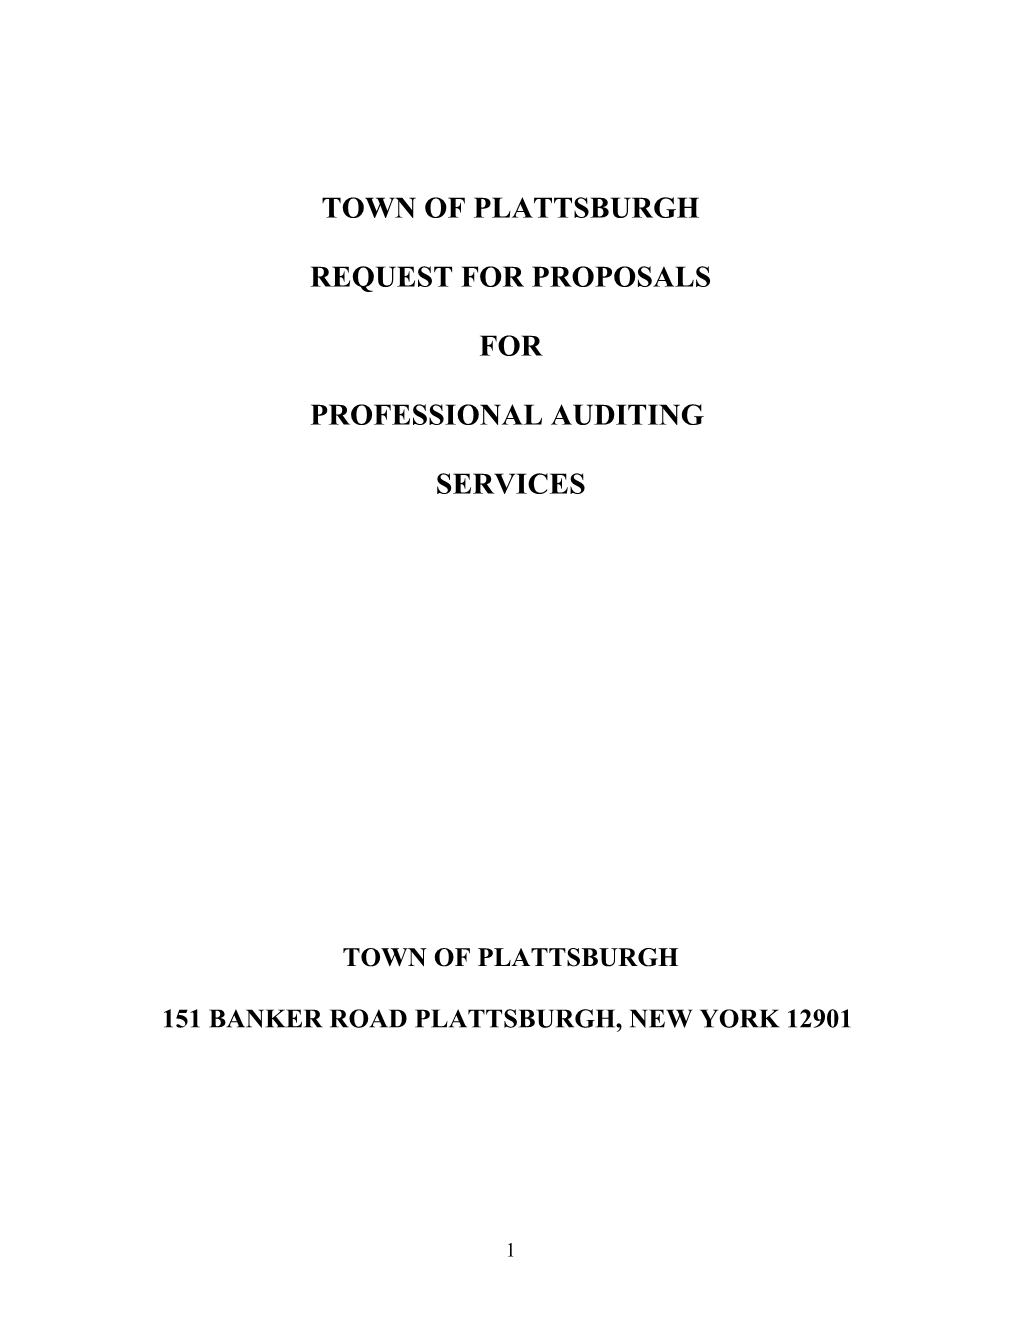 Town of Plattsburgh